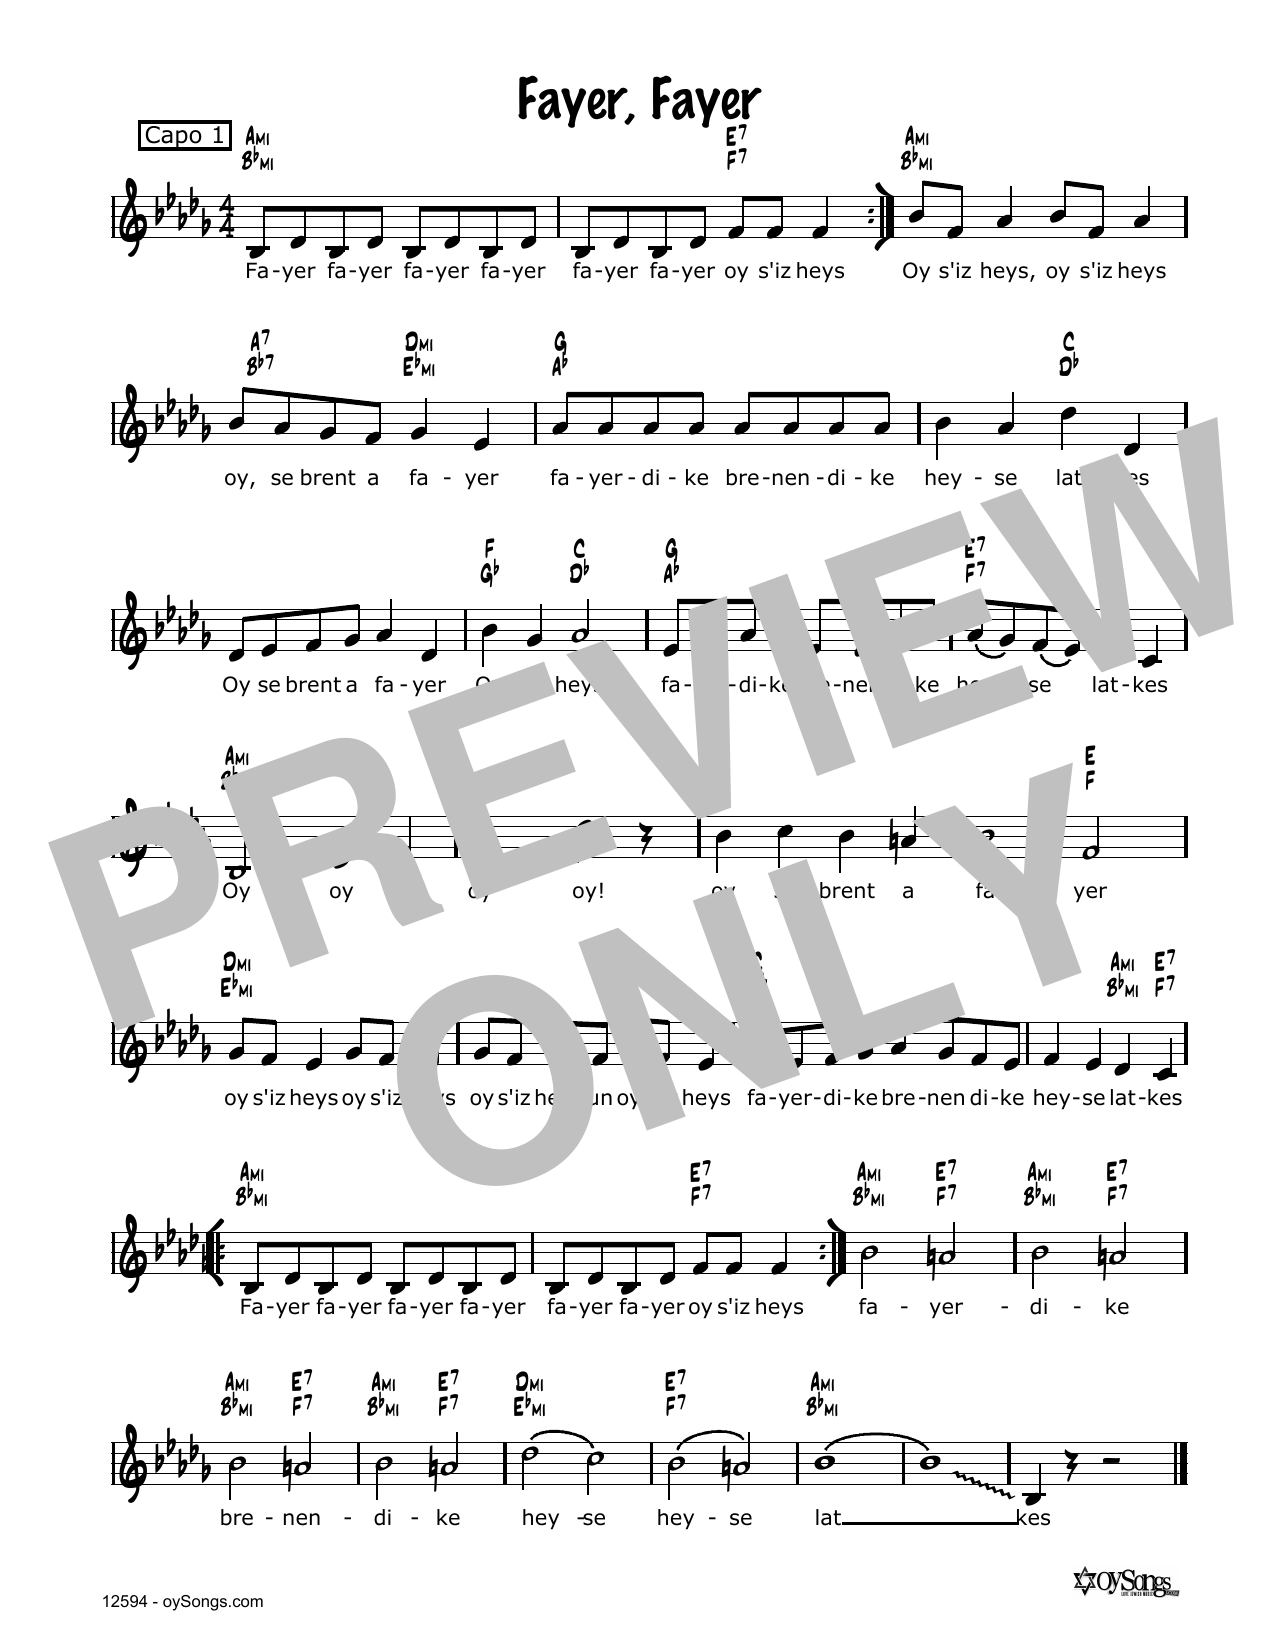 Vladimir Heyfetz Fayer, Fayer Sheet Music Notes & Chords for Melody Line, Lyrics & Chords - Download or Print PDF